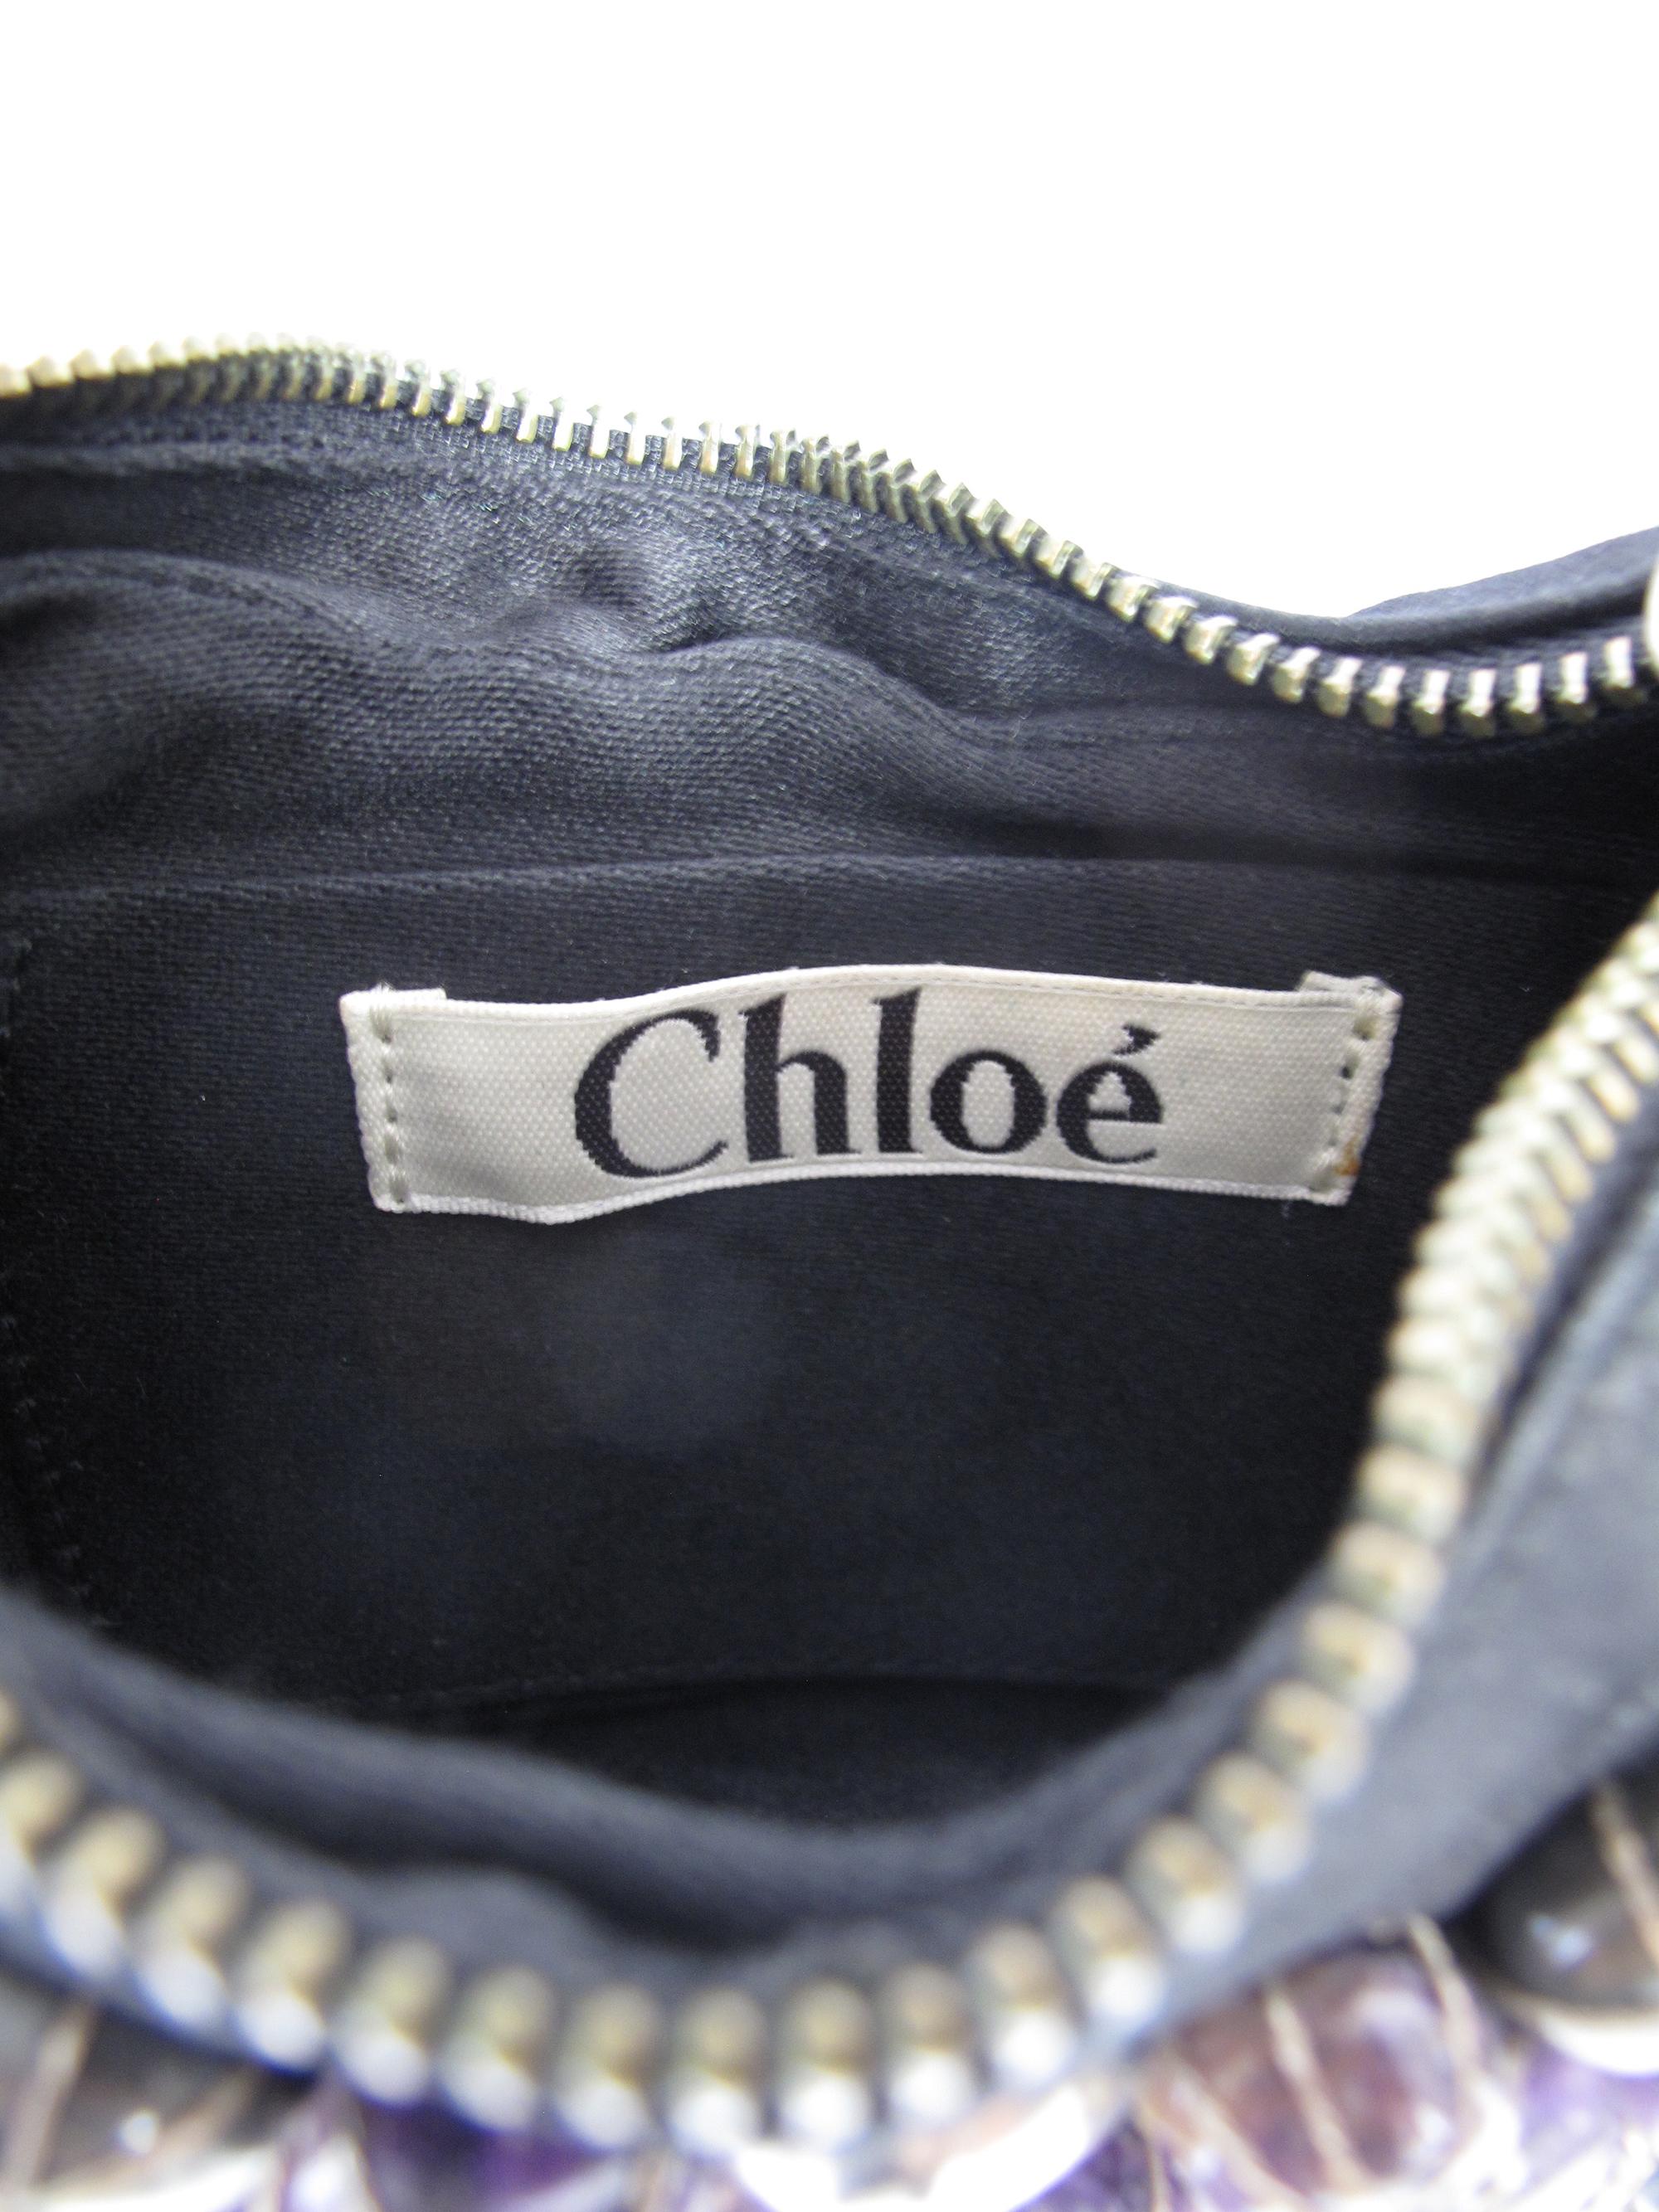 Chloe Black Satin Mini Bag with Stone Embellishments Phoebe Philo 1